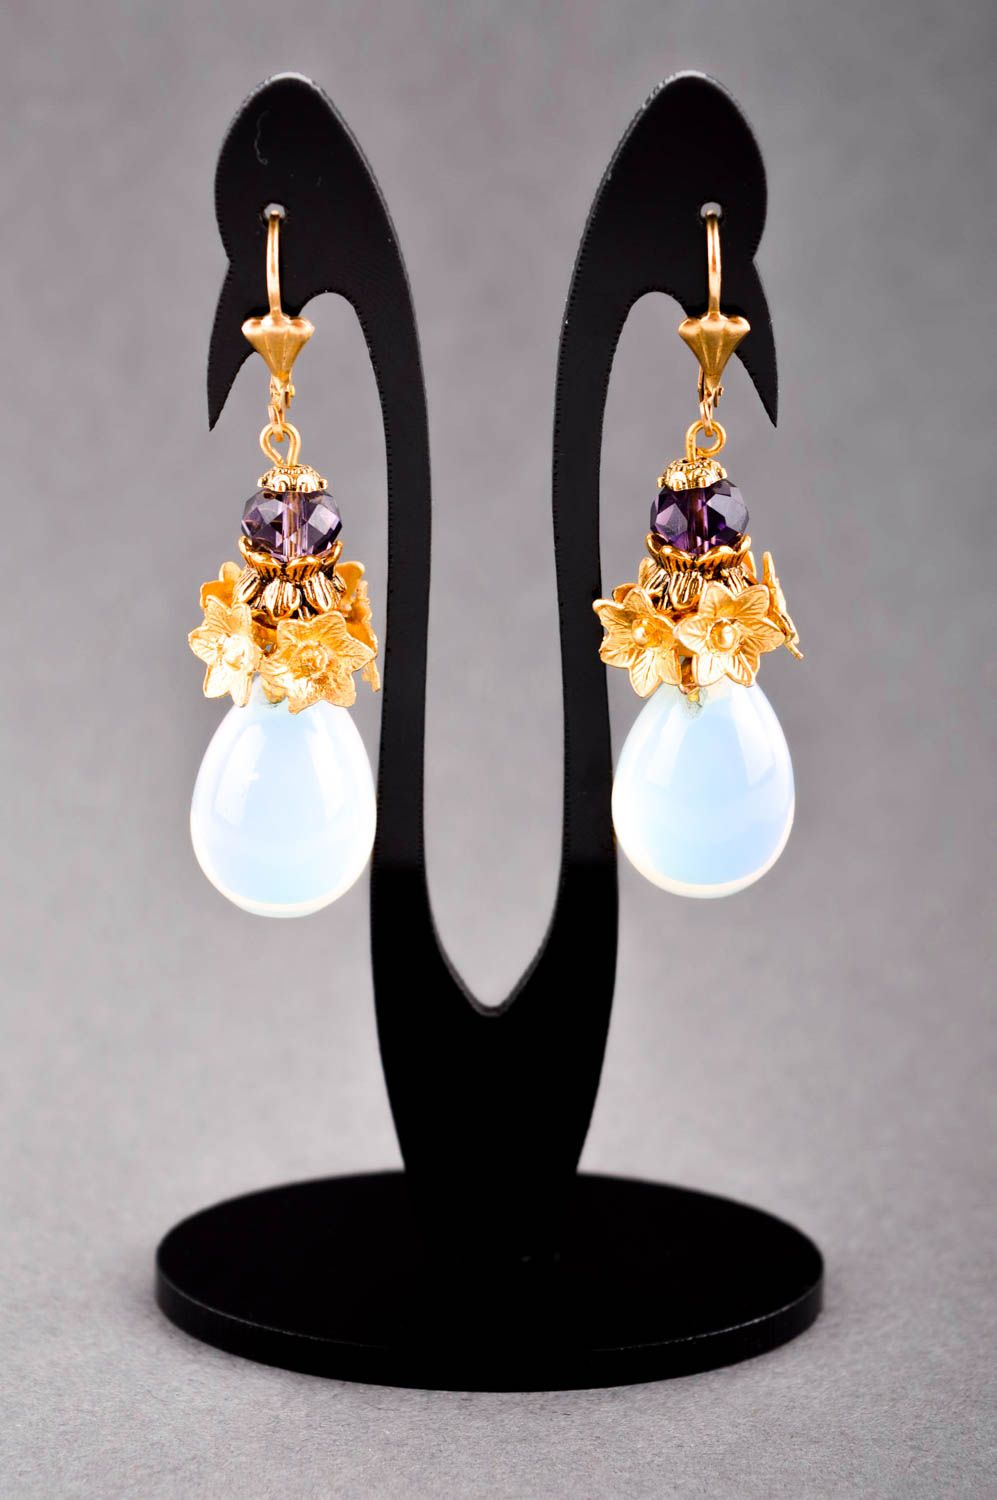 Handmade earrings designer accessory unusual earrings with stones gift ideas photo 1